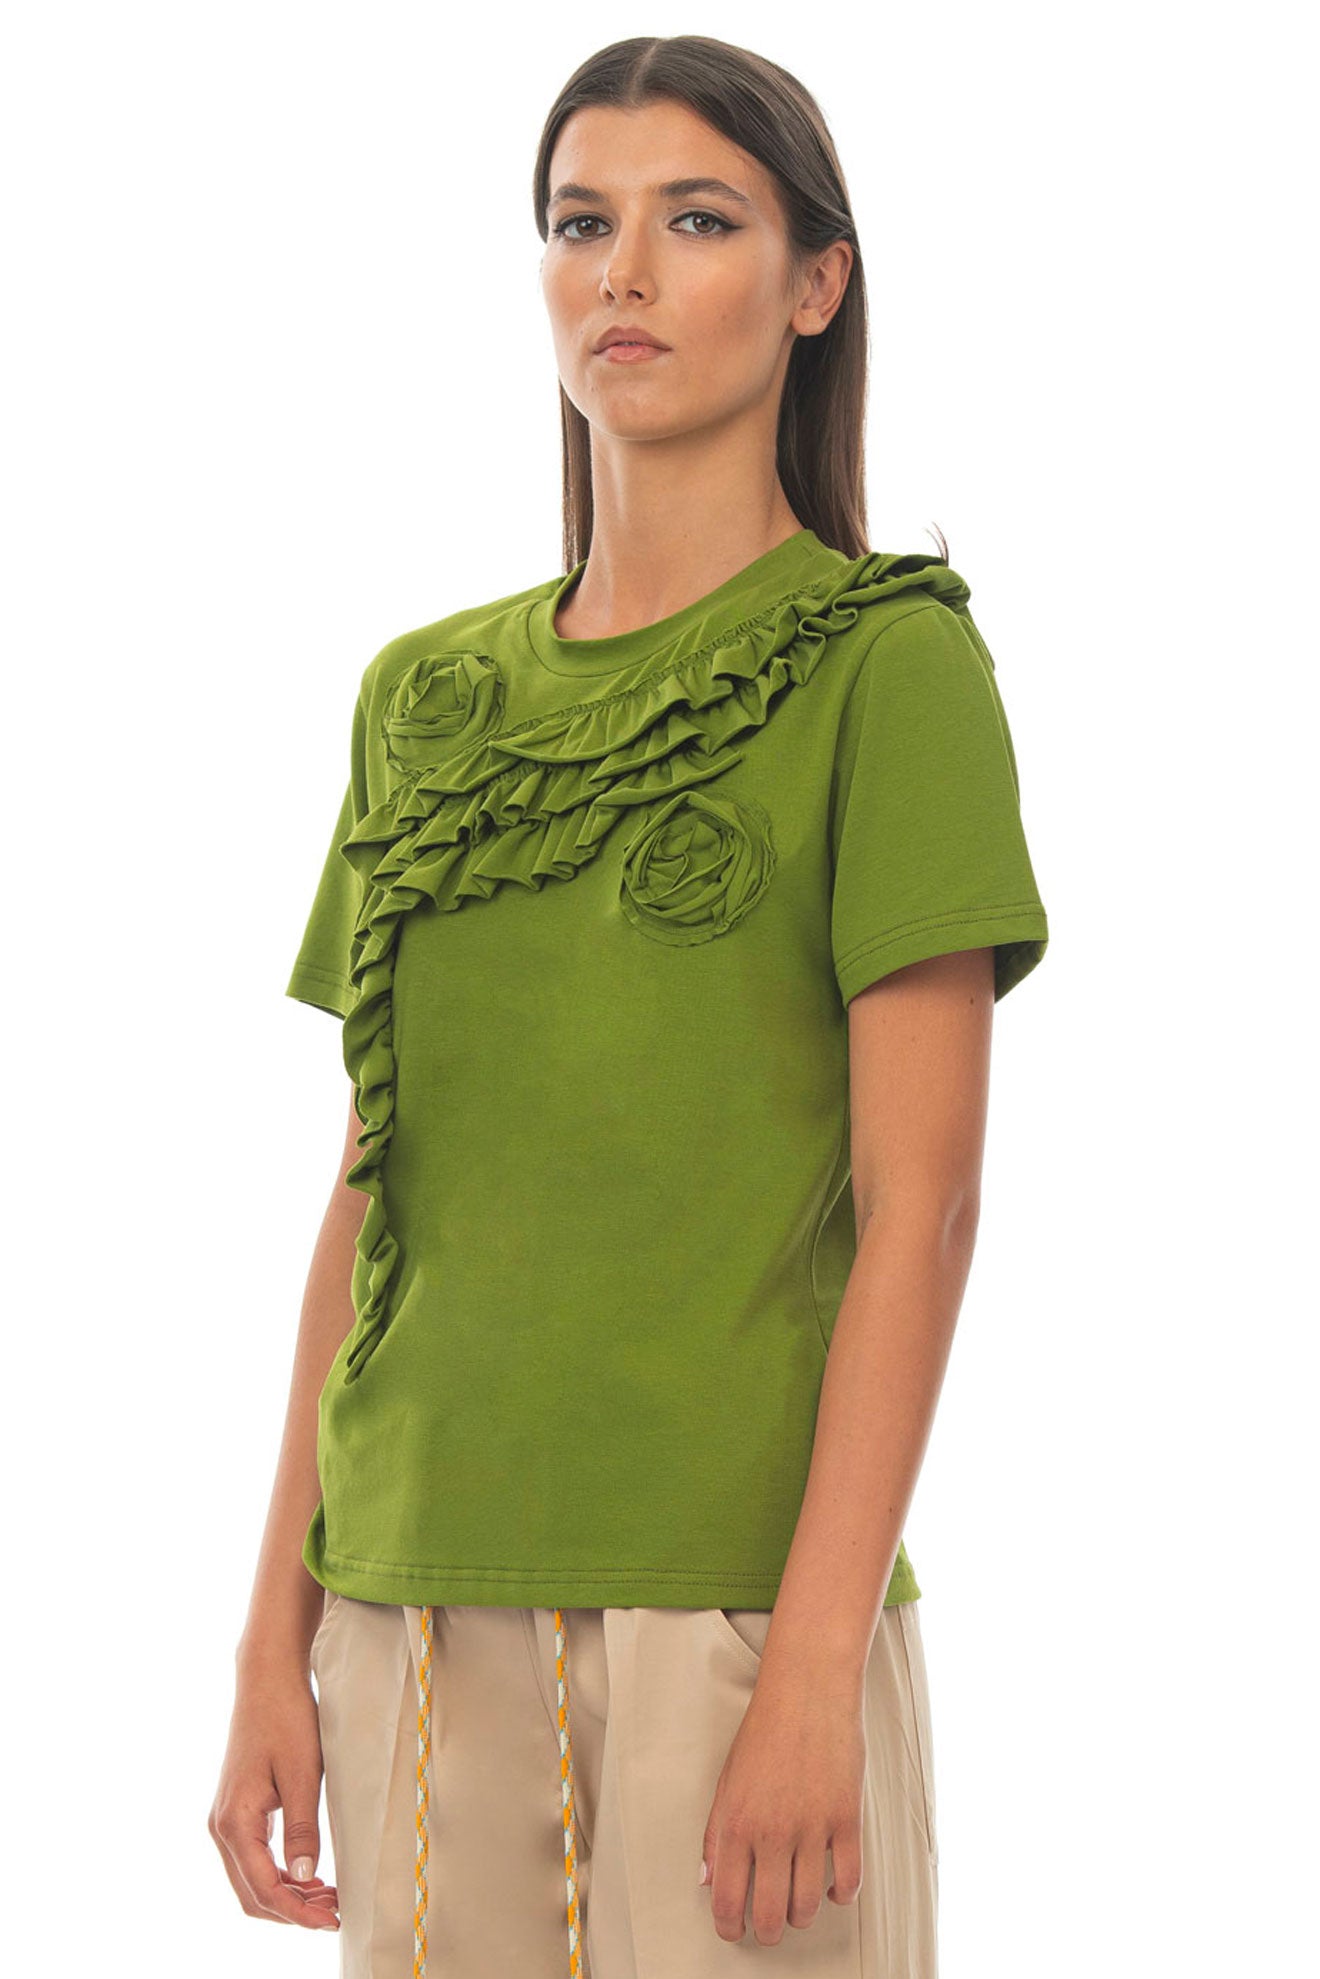 Jasmine Green T-shirt